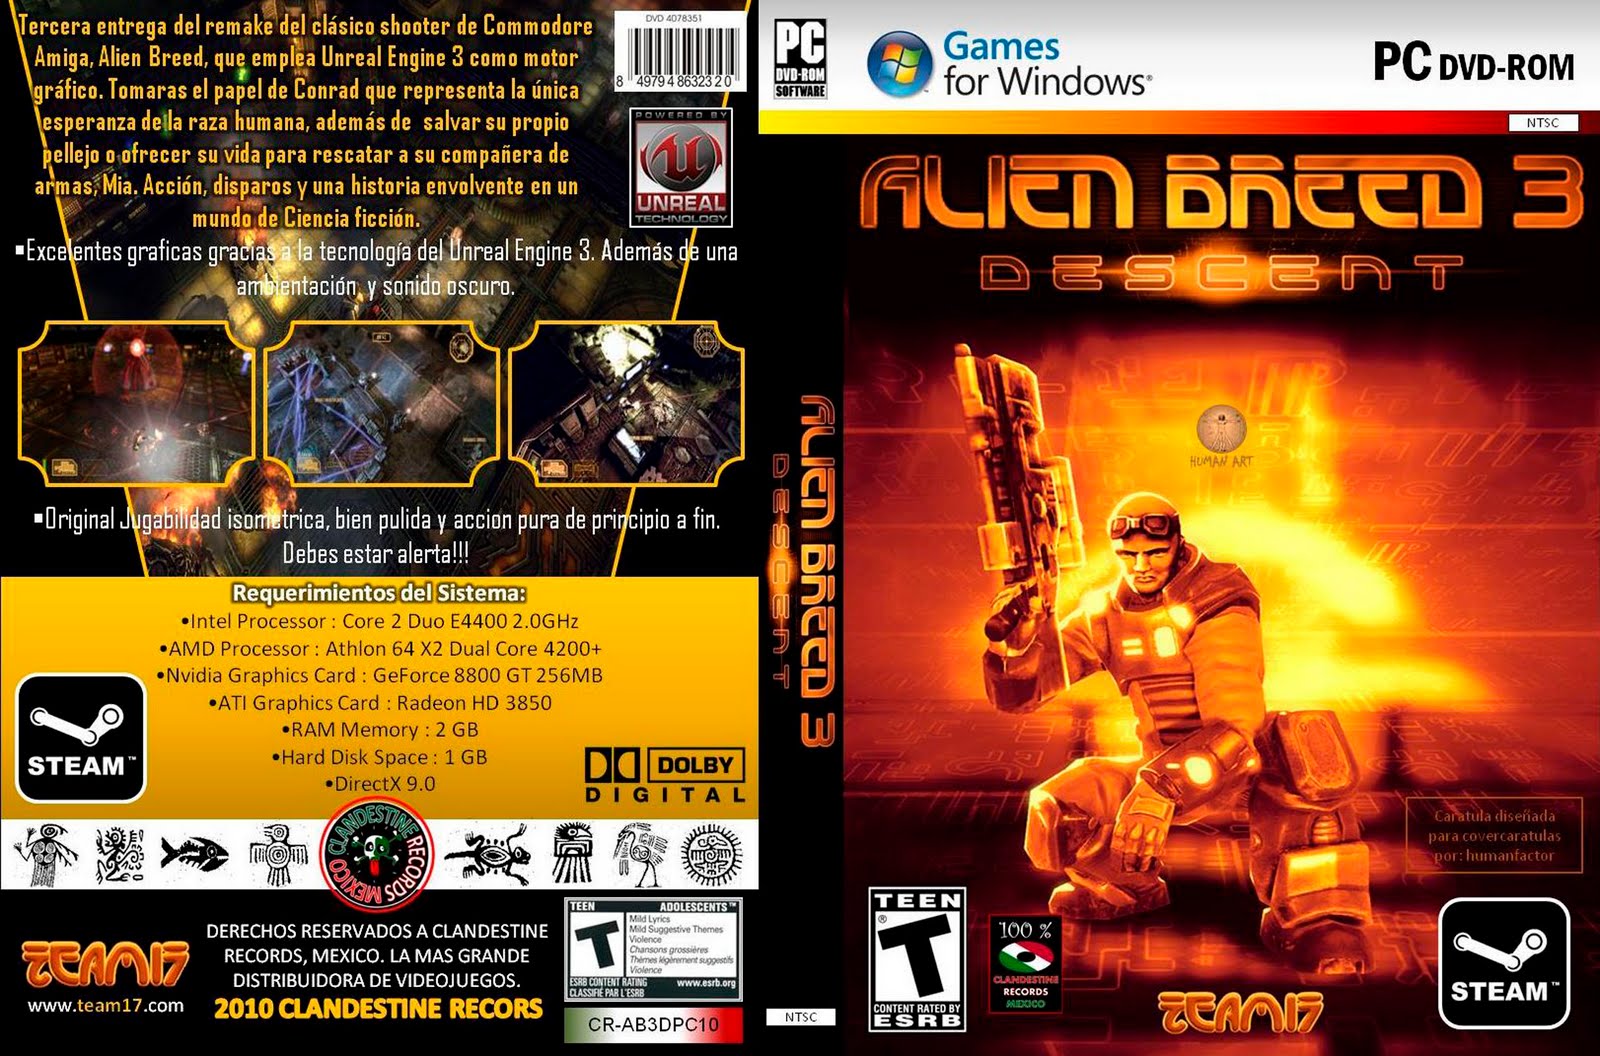 Caratula de Alien Breed 3 - Descent PC (DVD)